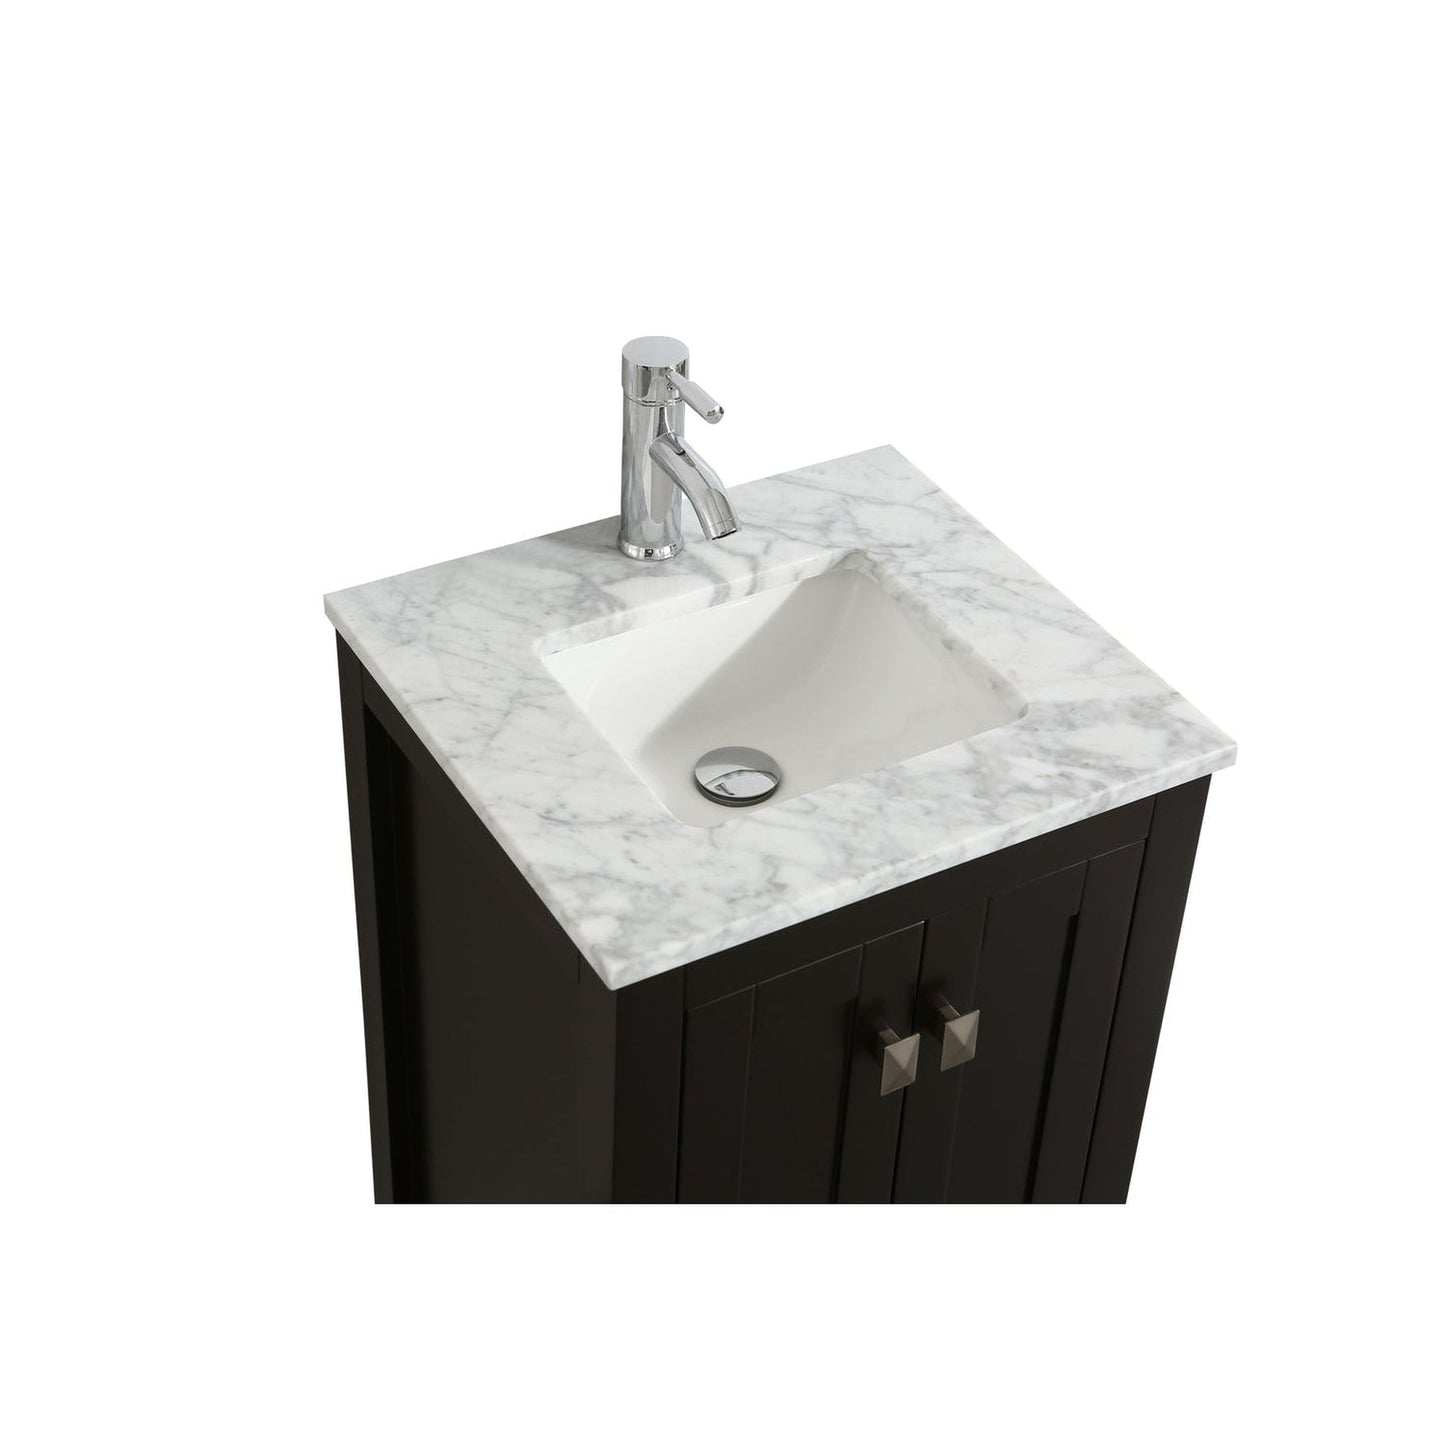 Eviva London 24" x 34" Espresso Freestanding Bathroom Vanity With Carrara Marble Countertop and Single Undermount Sink